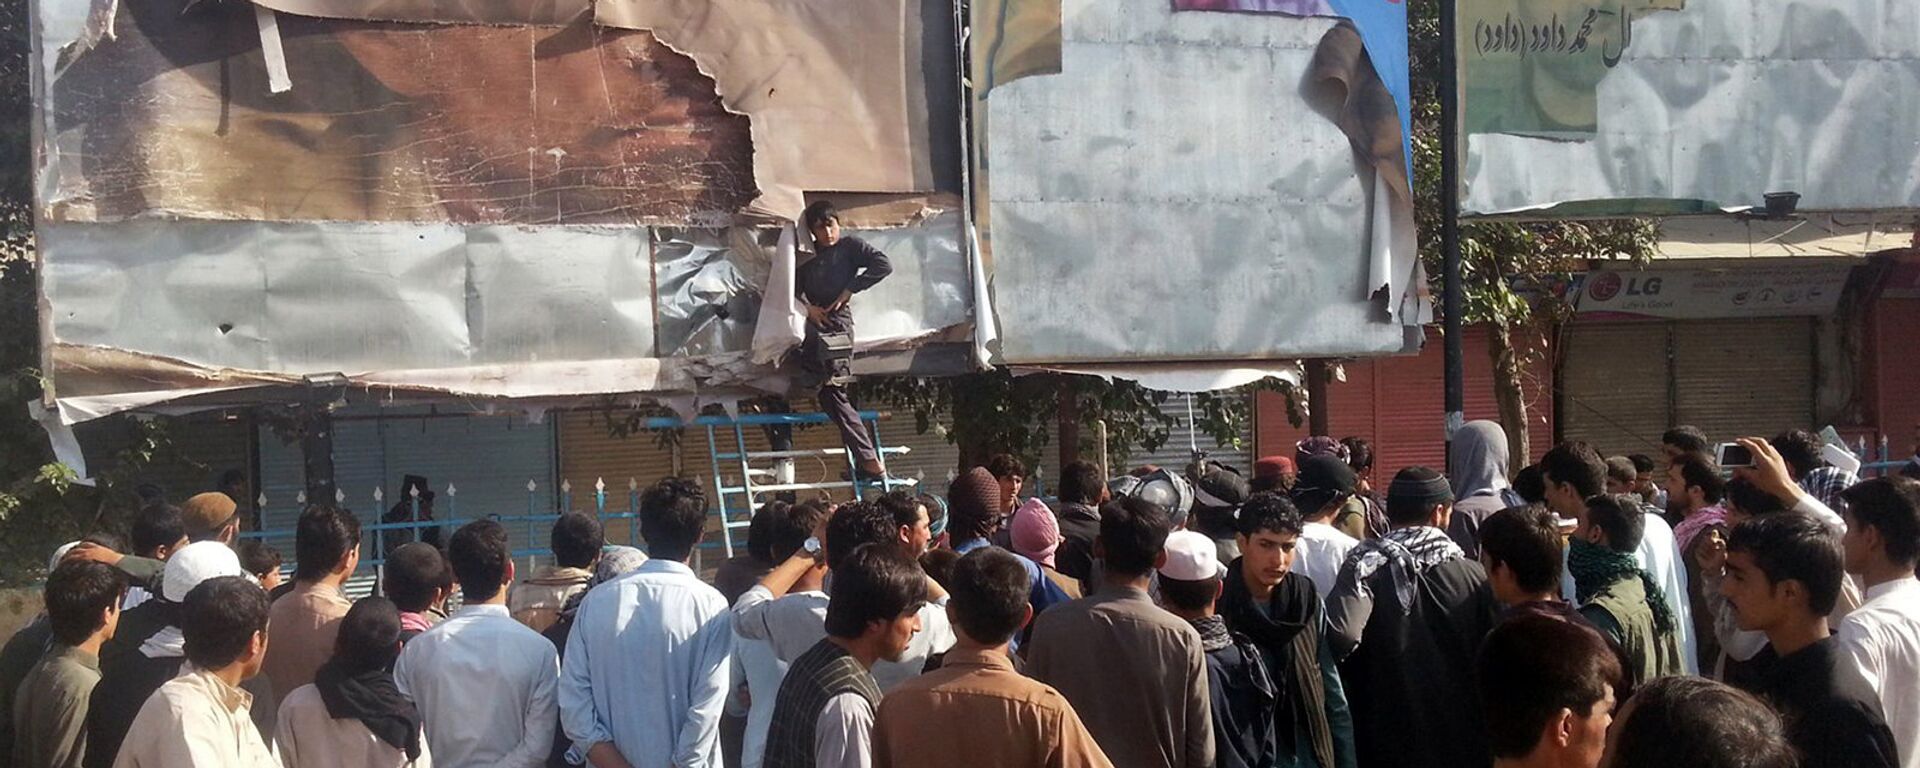 Сторонники Талибана срывают плакаты на улицах Кундуза 29 сентября 2015 года - Sputnik Тоҷикистон, 1920, 15.07.2021